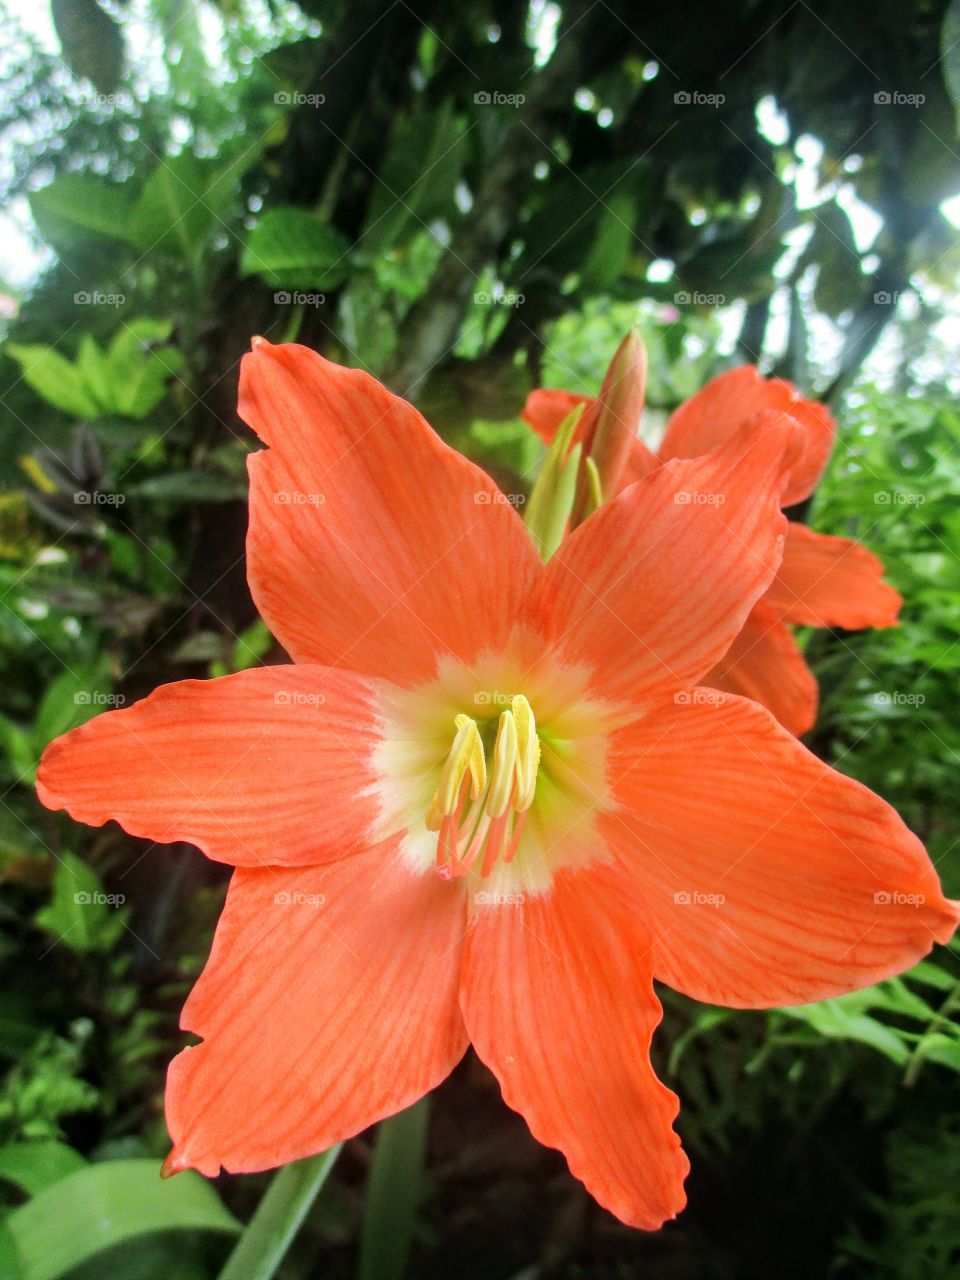 Amaryllis Flower